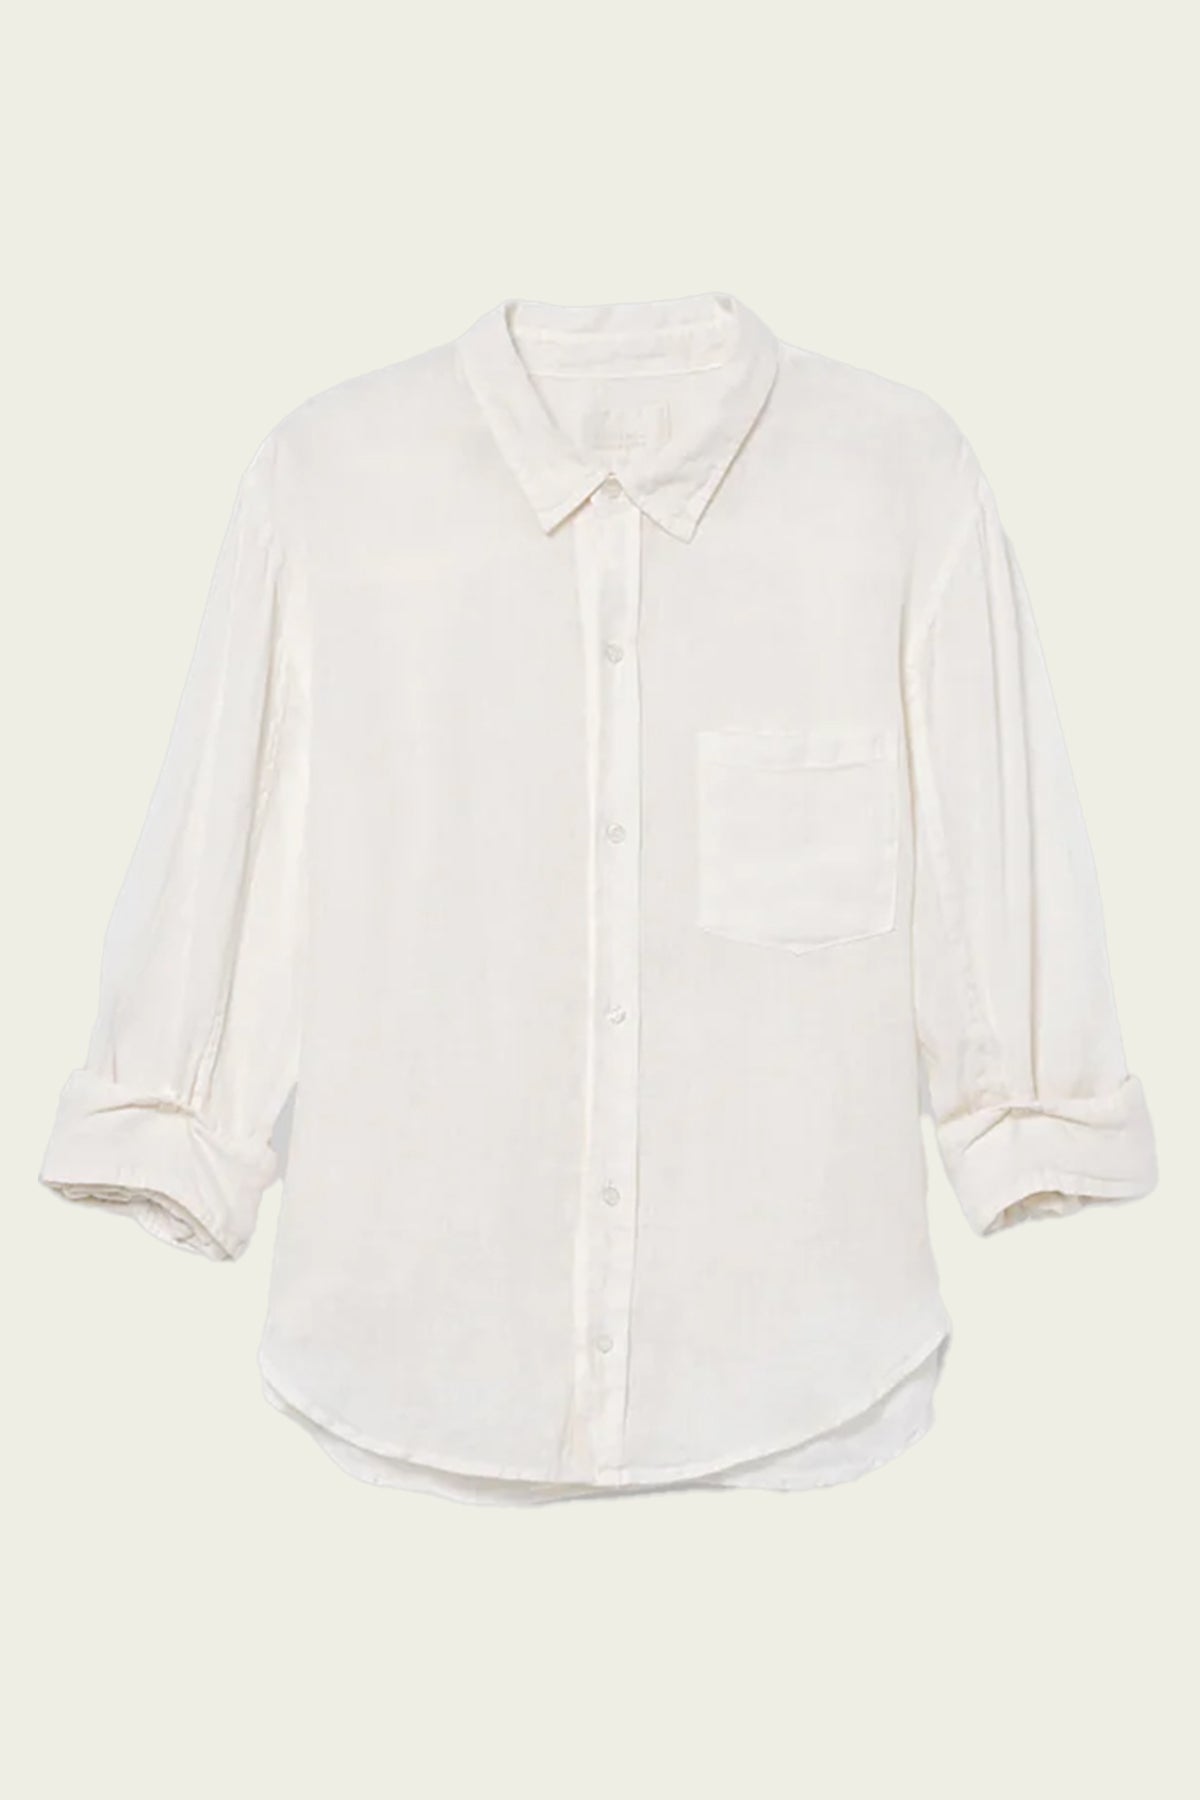 Kayla Shrunken Linen Shirt in Vanilla - shop - olivia.com